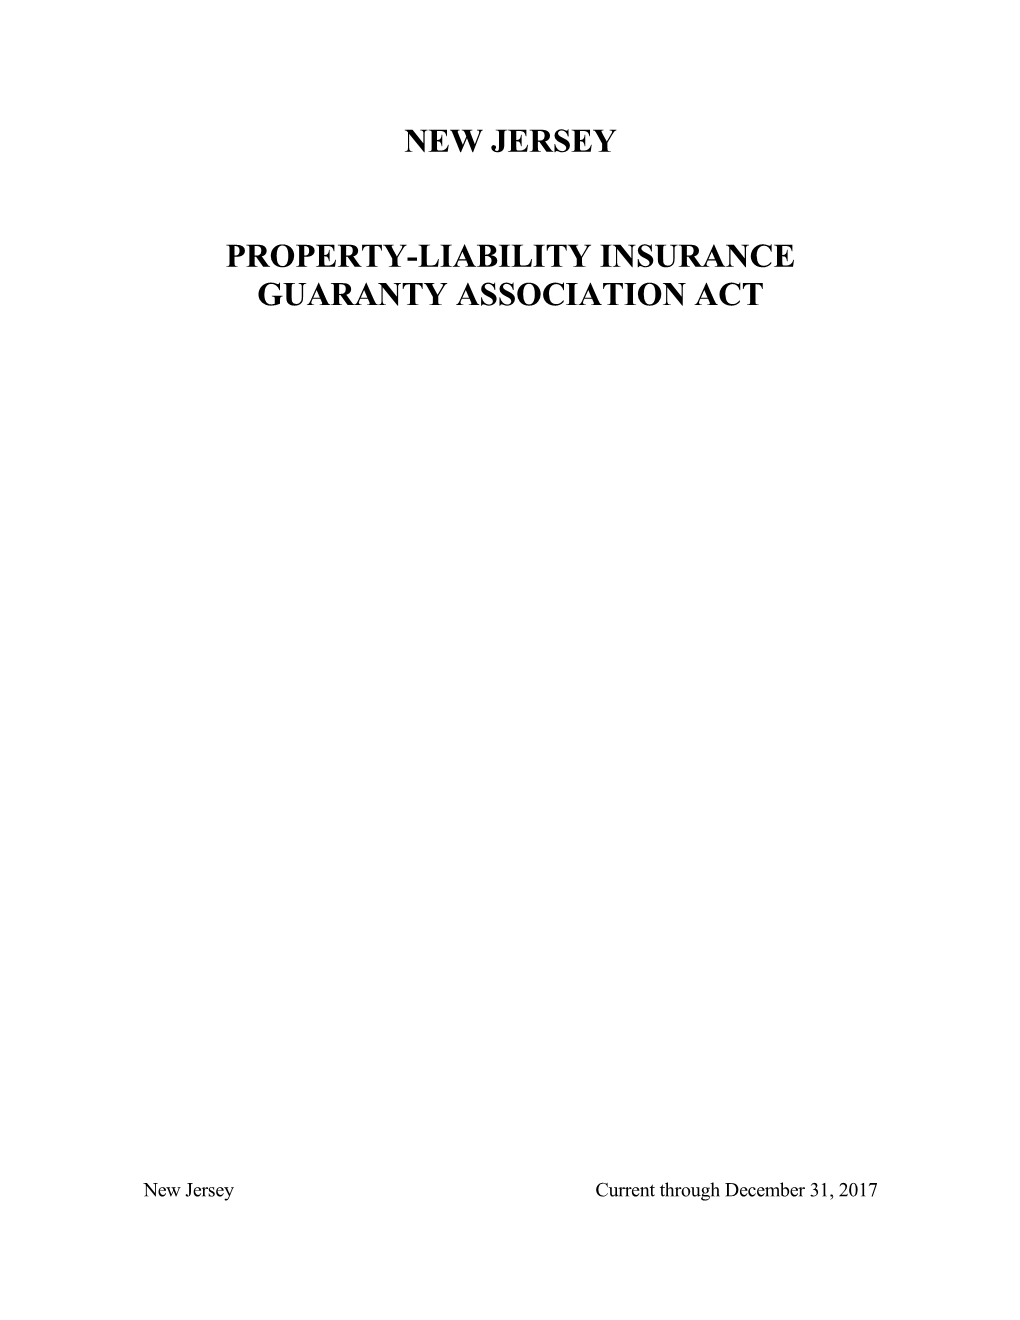 Property-Liability Insurance